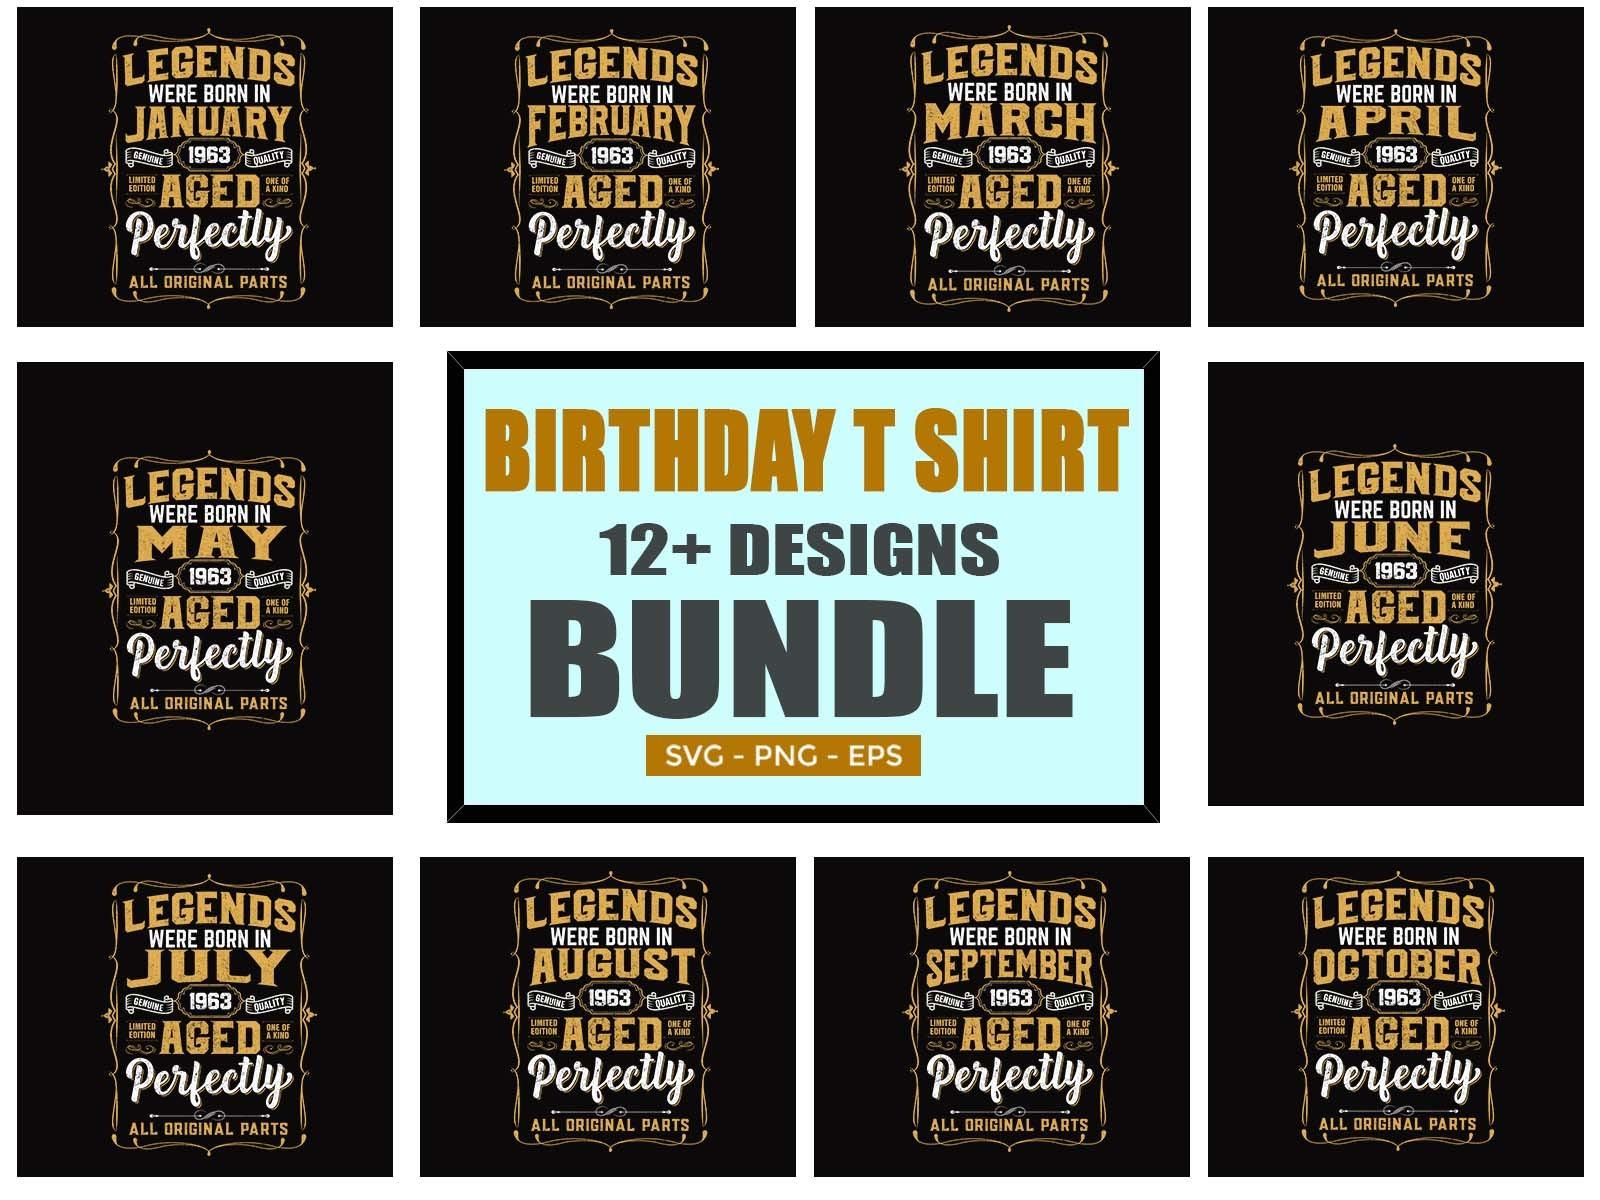 Legends Birthday T Shirt Design